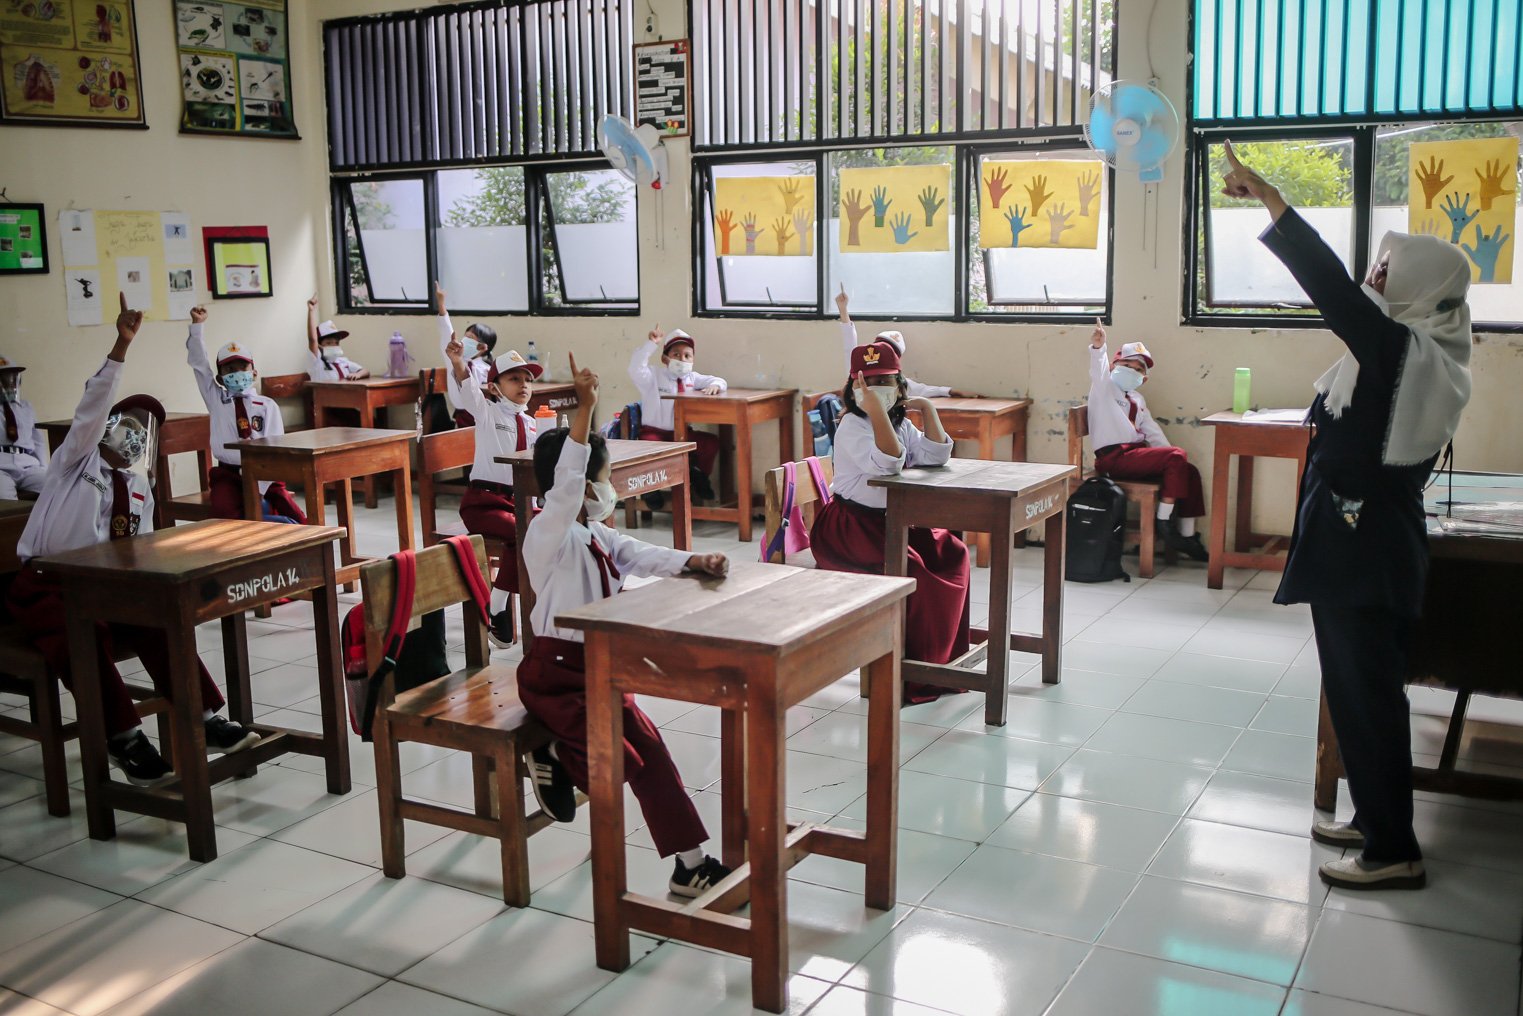 Sejumlah siswa mengikuti kegiatan Pembelajaran Tatap Muka (PTM) perdana di Sekolah Dasar Negeri (SDN) Pondok Labu 14 Pagi, Cilandak, Jakarta Selatan, Senin, (30/8/2021). Dinas Pendidikan DKI Jakarta resmi mengeluarkan petunjuk teknis sekolah tatap muka yang akan digelar mulai hari ini. Aturan petunjuk teknis itu tertuang dalam Keputusan Kepala Dinas Pendidikan DKI Jakarta Nomor 882 Tahun 2021 tentang teknis pembelajaran tatap muka terbatas di masa pandemi Covid-19.\r\n\r\n